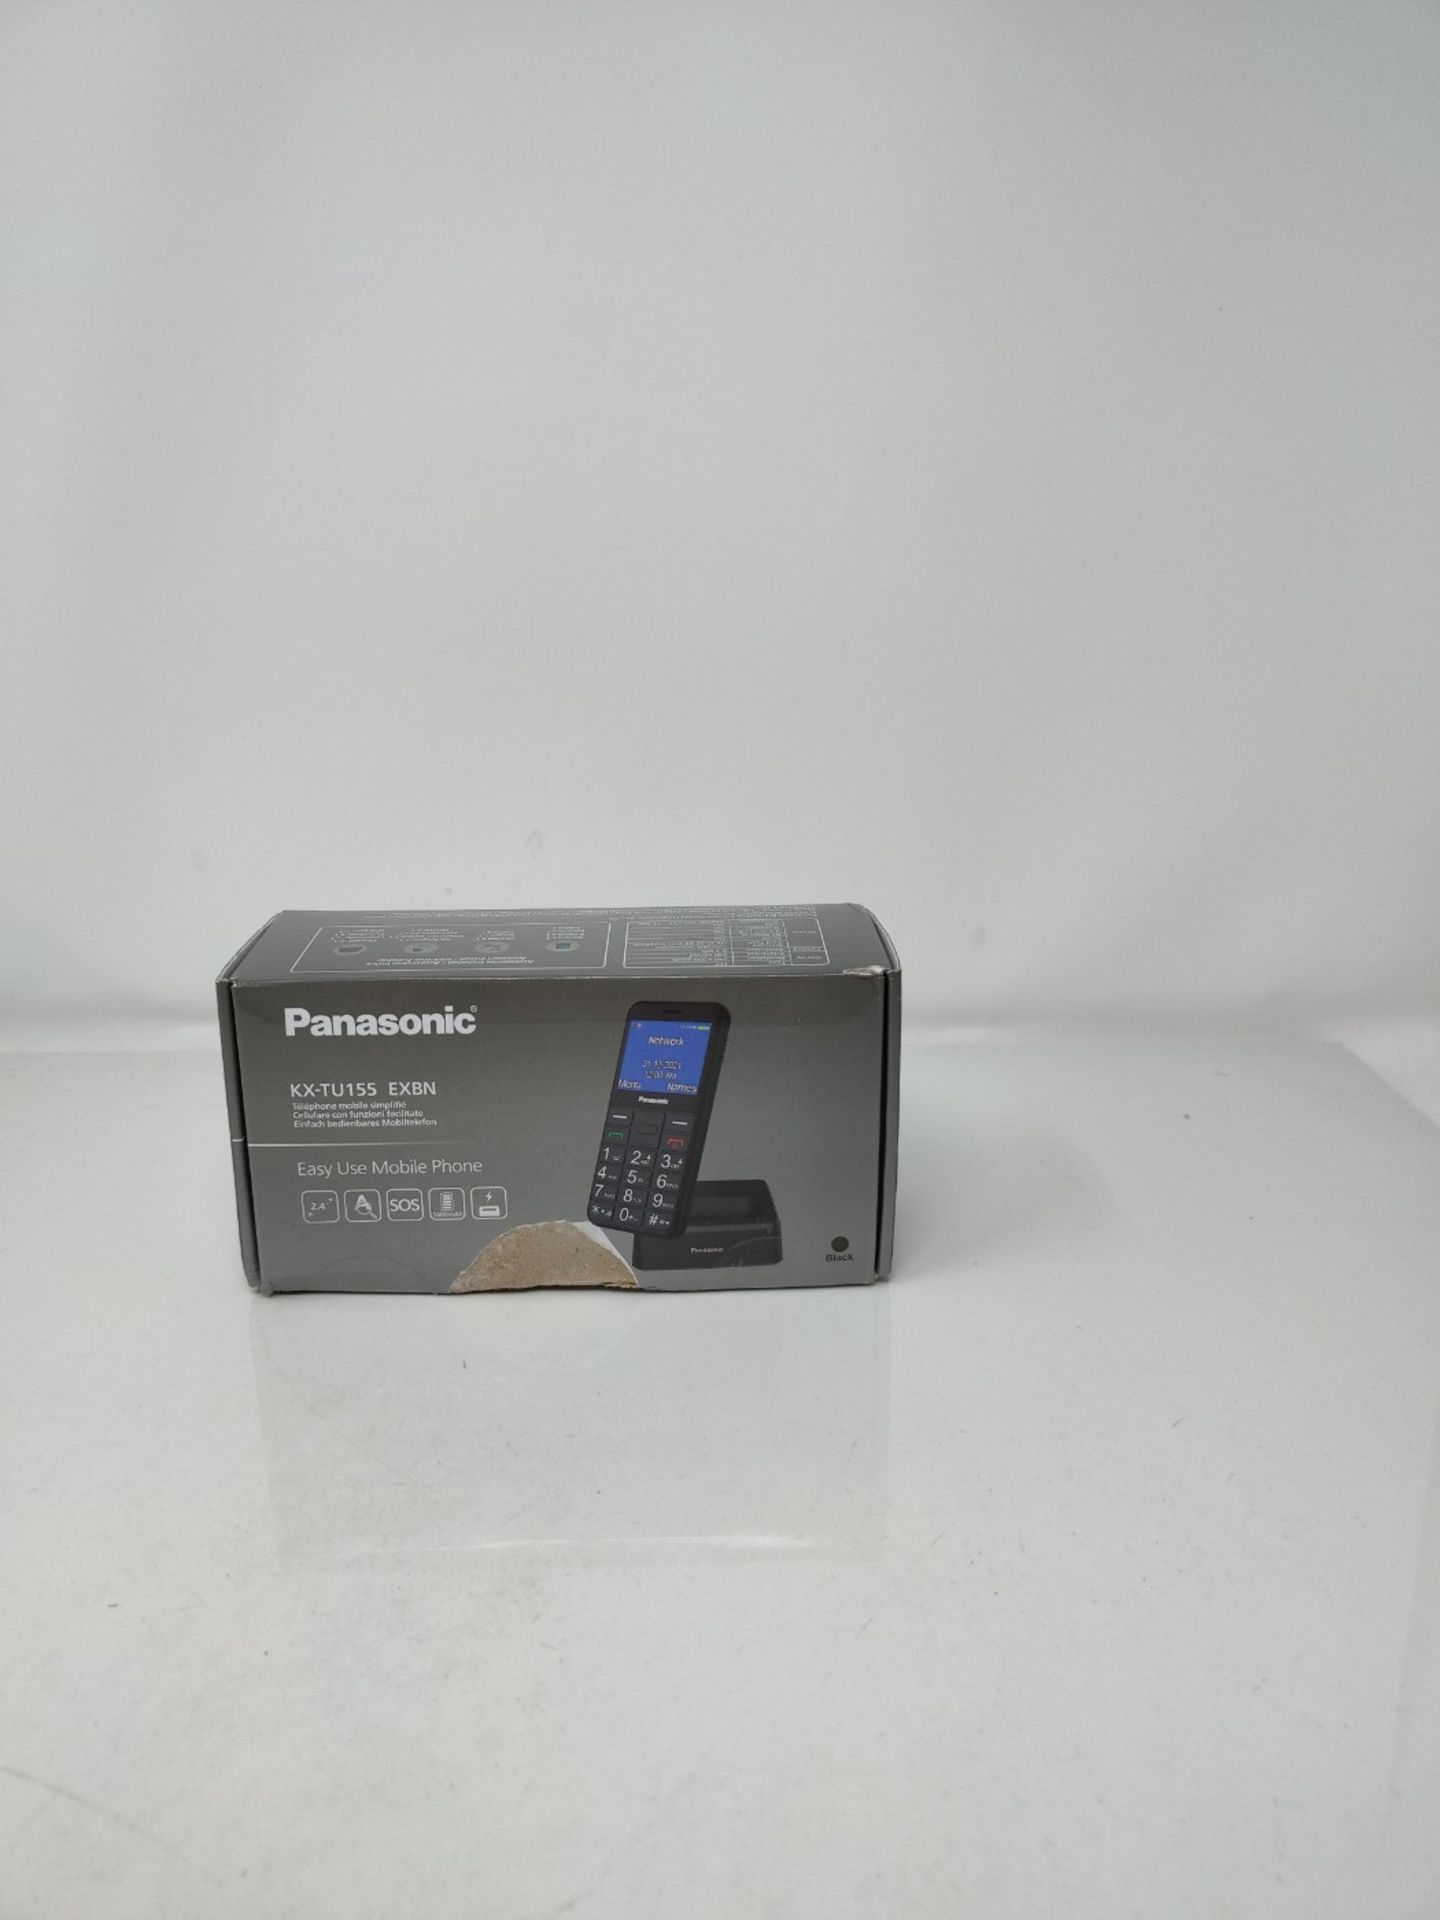 Panasonic KX-TU155 EXBN Easy Use Mobile Phone